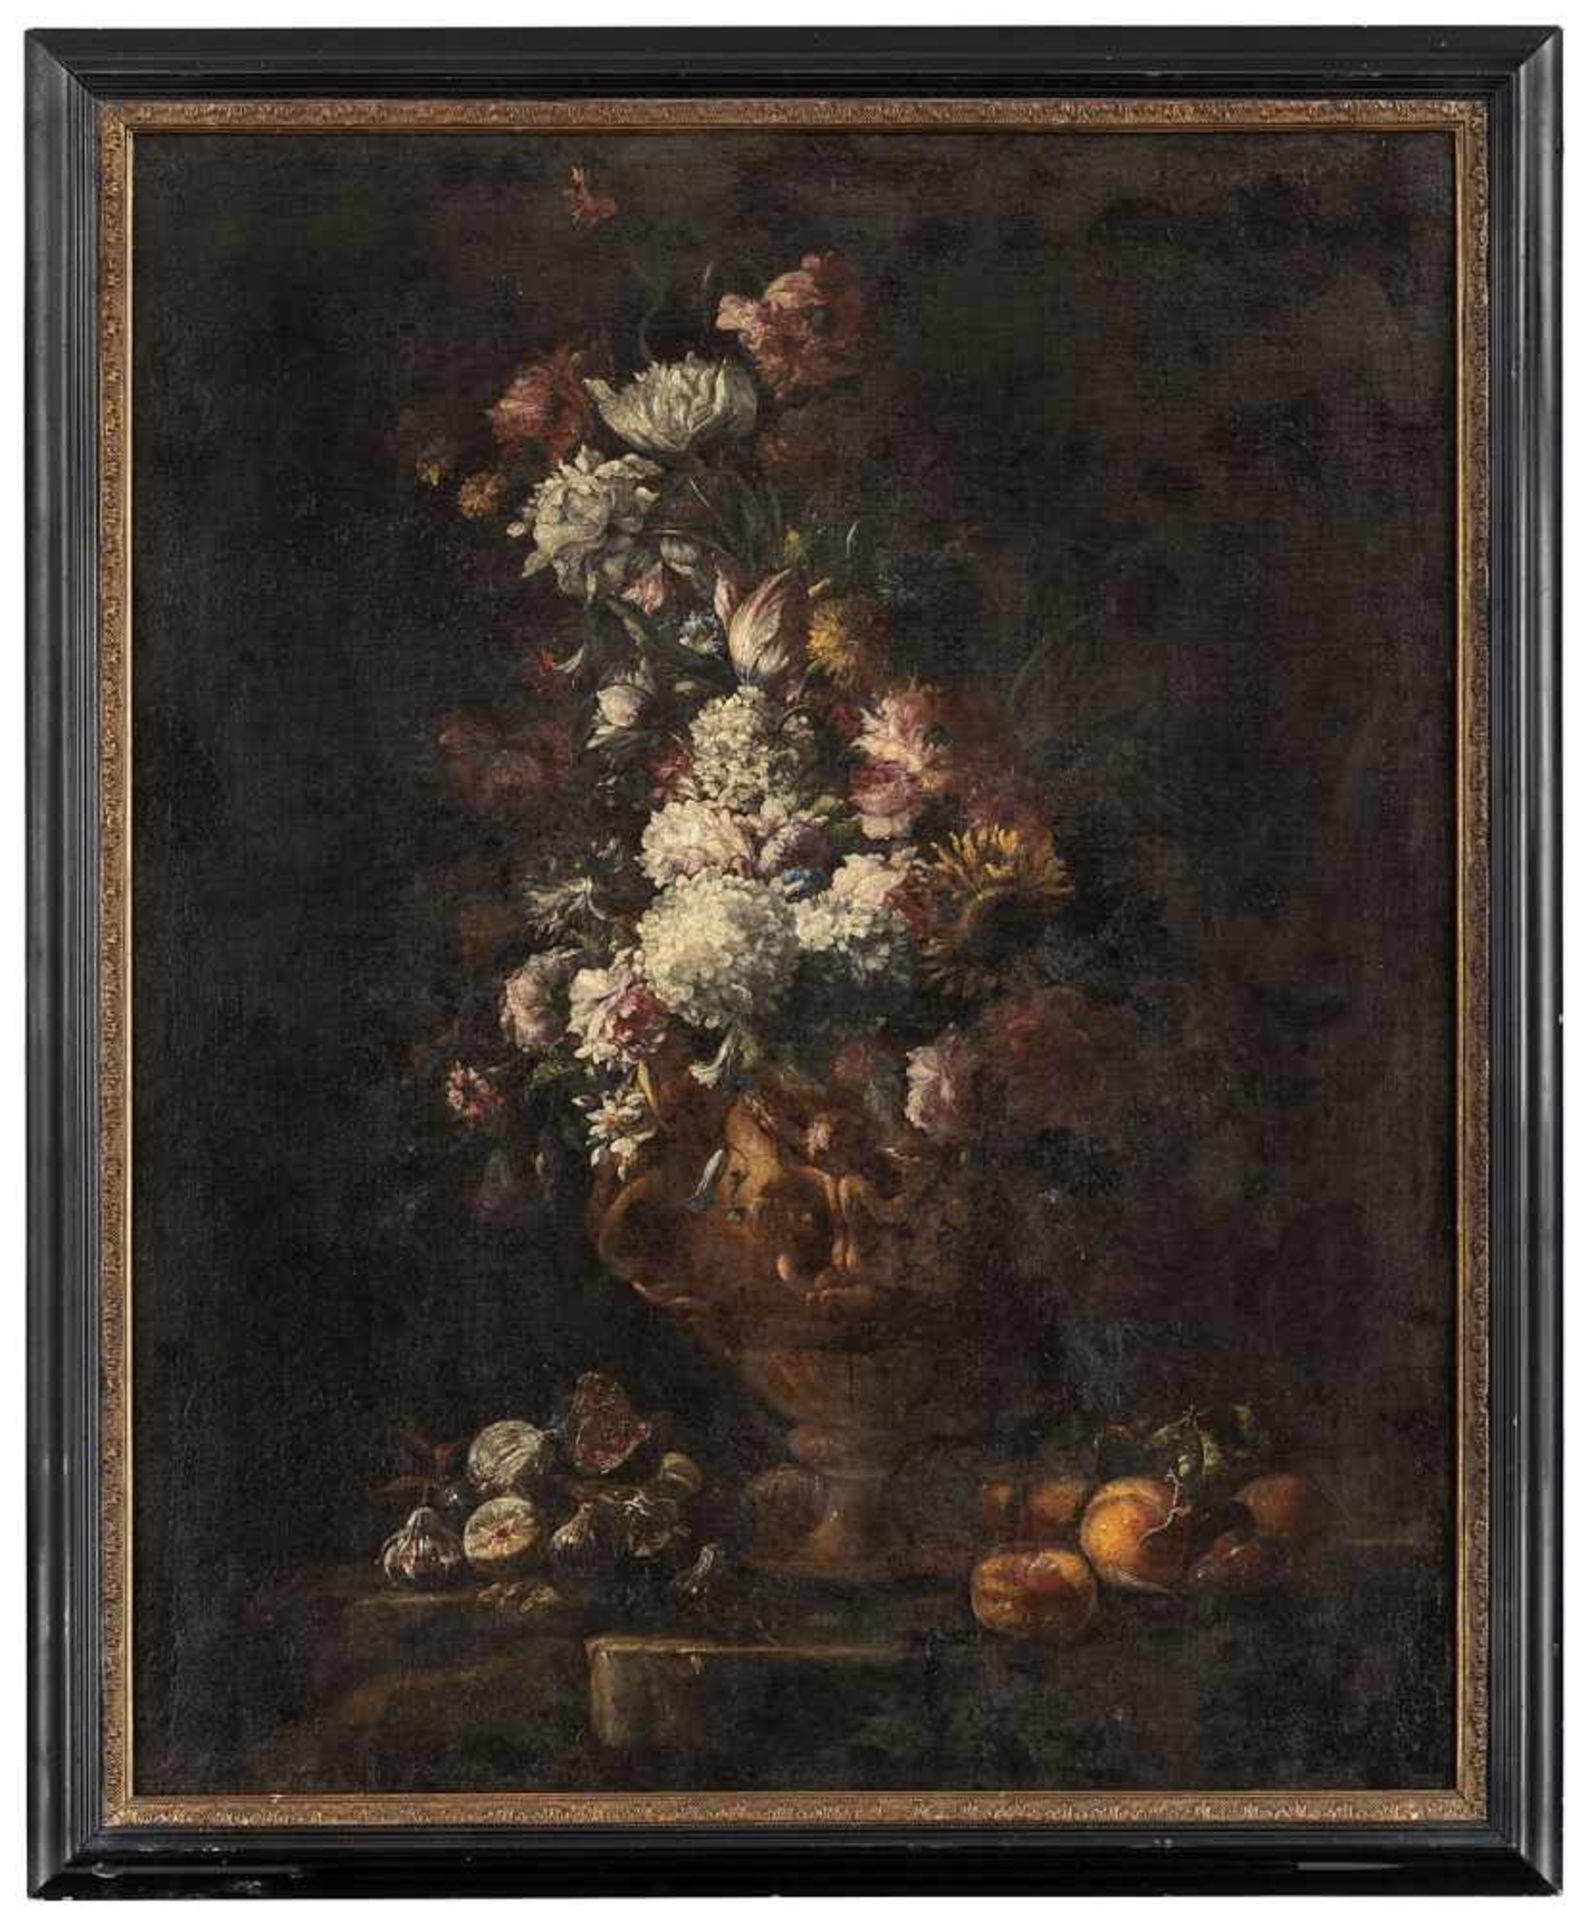 BIMBI, BARTOLOMEO (attr., 1648-1730). Still life of flowers in a relief pattern vase on a pedestal